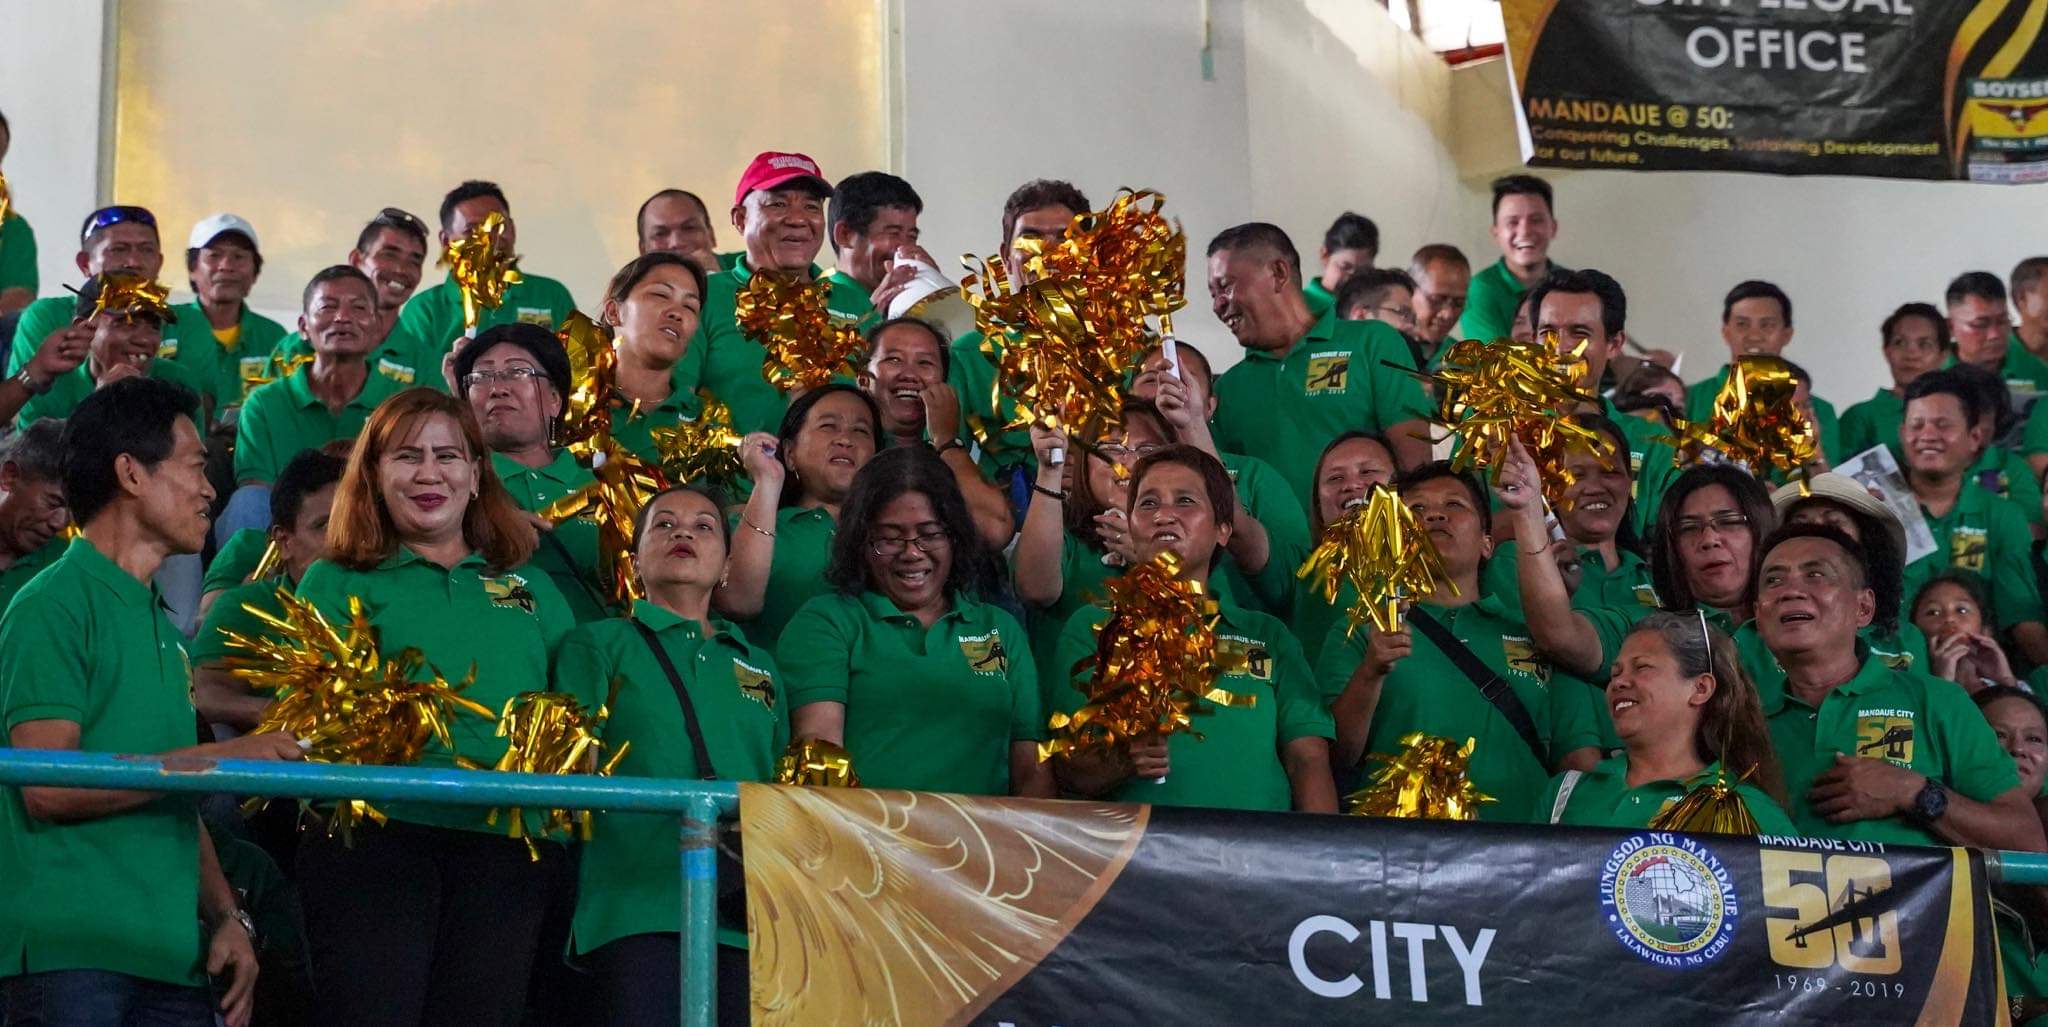 IN PHOTOS Mandaue City's 50th Charter Day Cebu Daily News